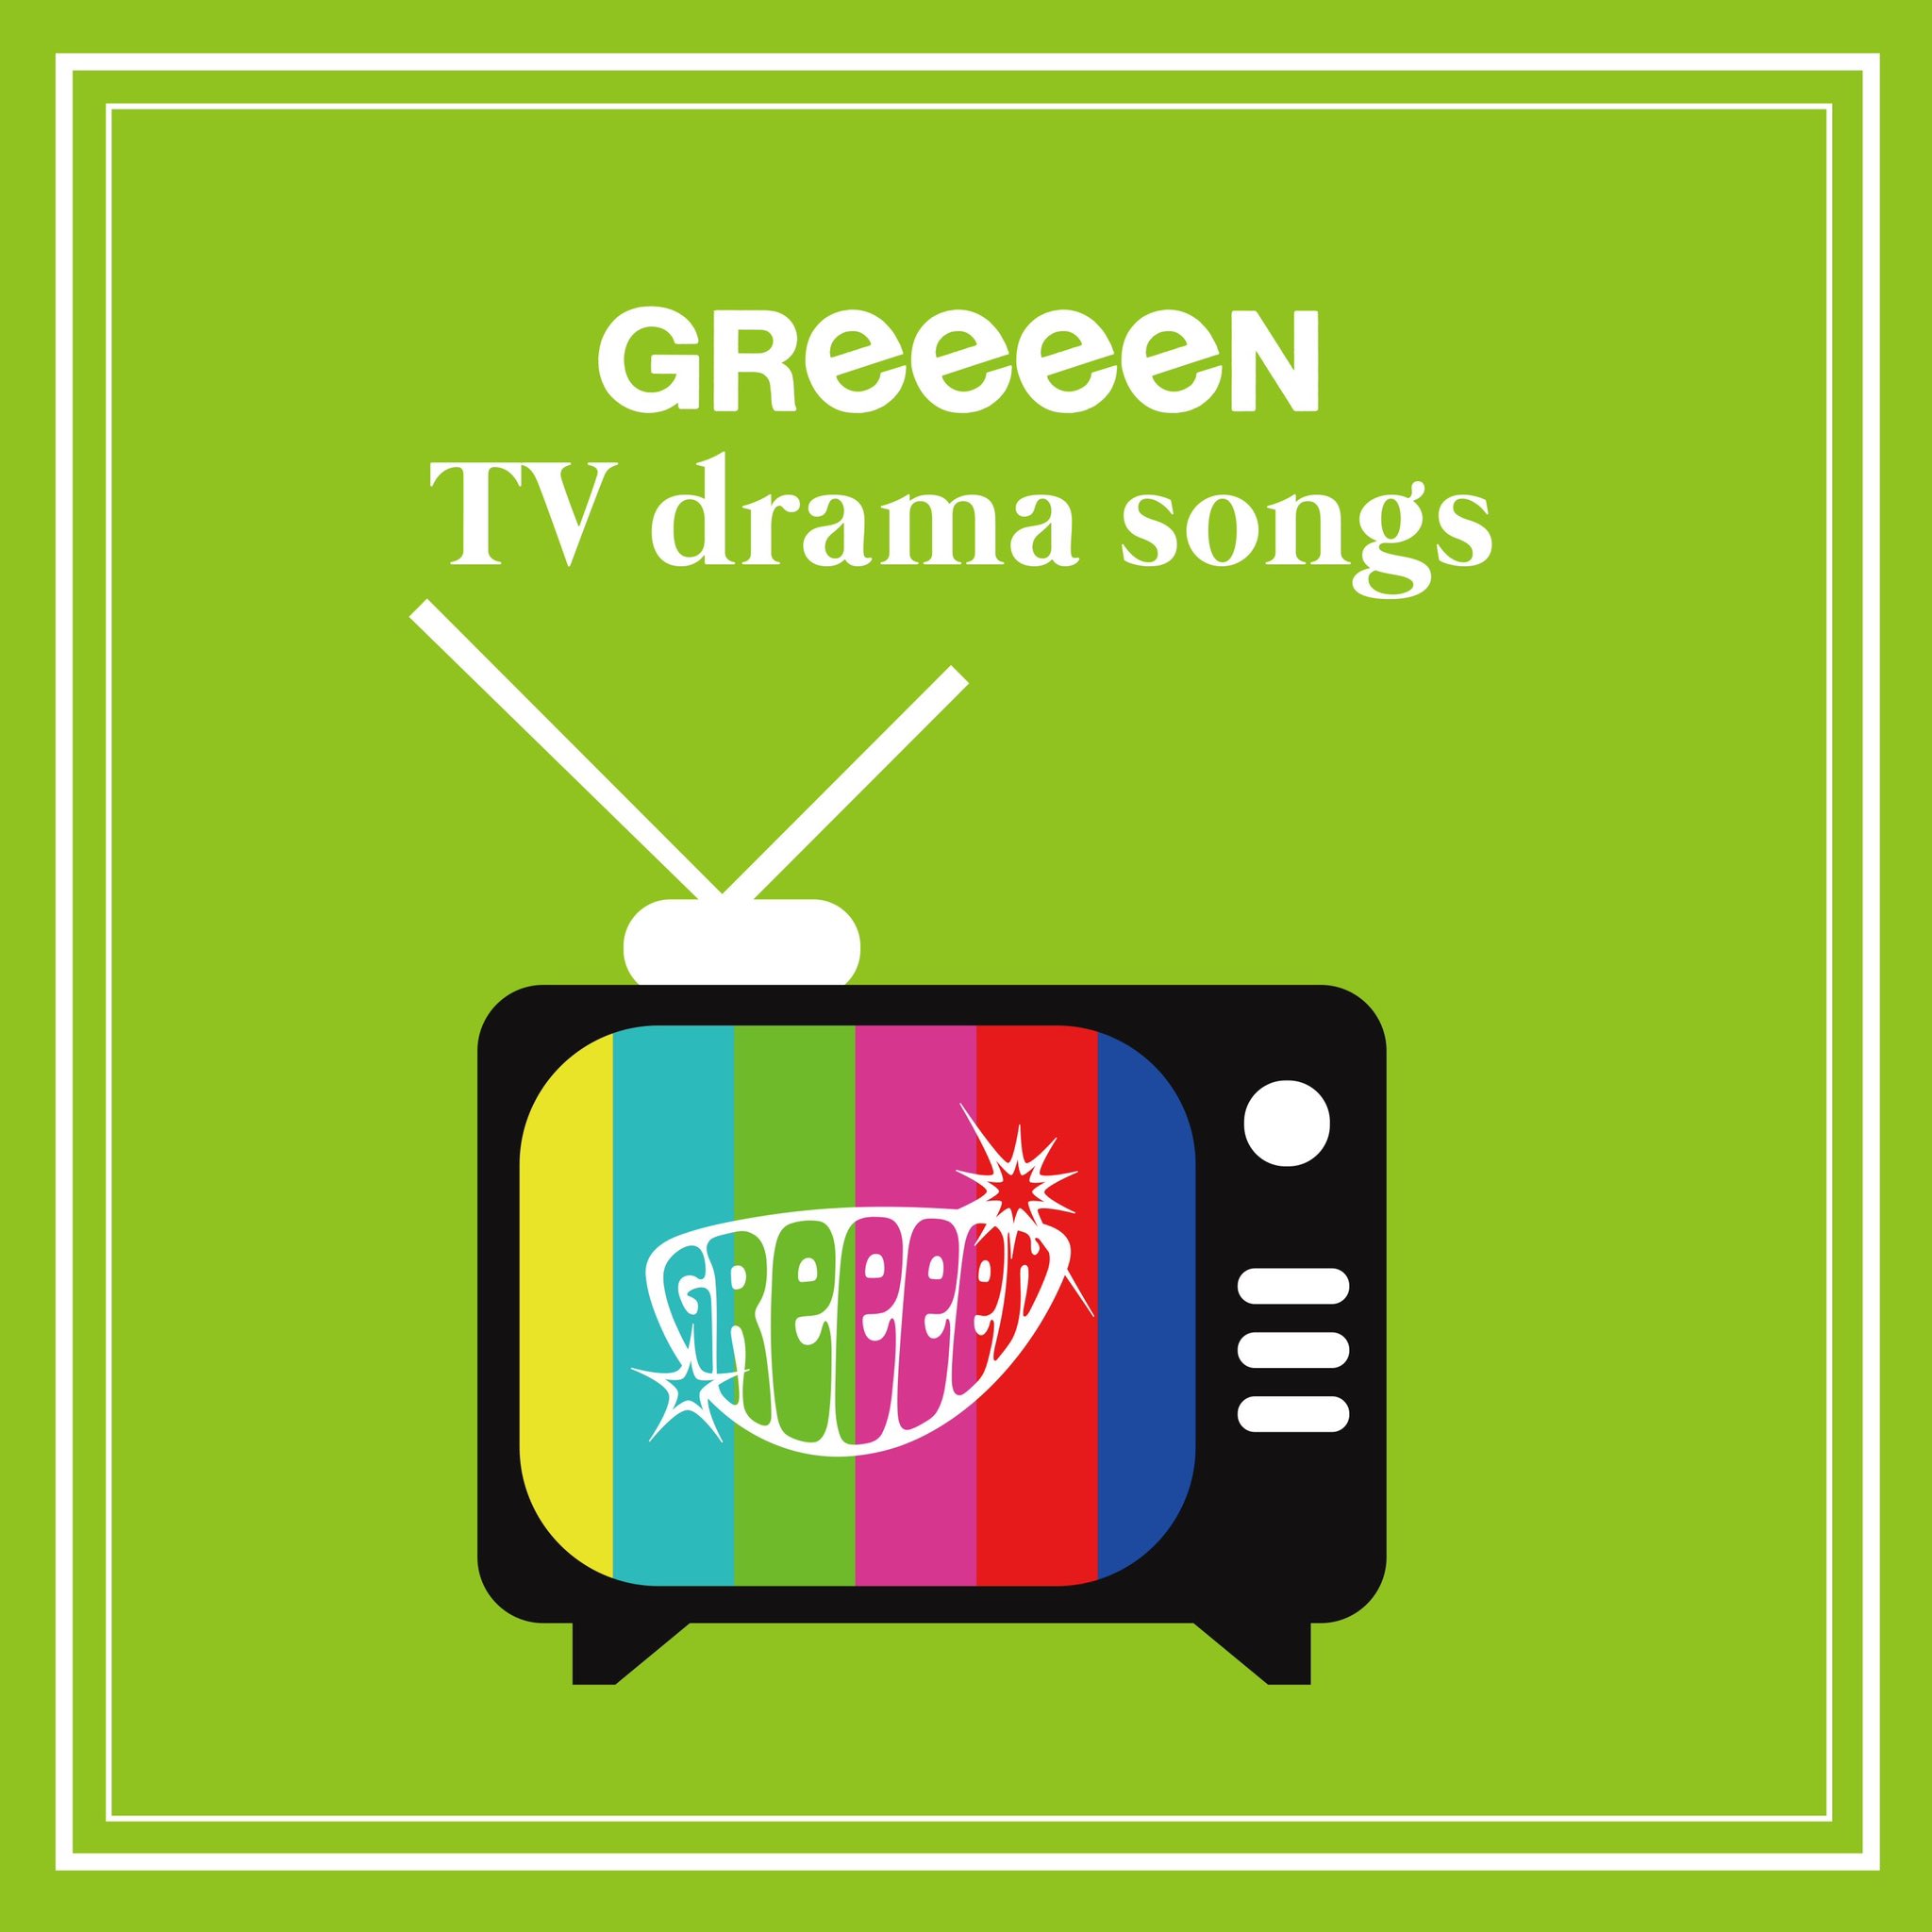 GReeeeN TV drama songs